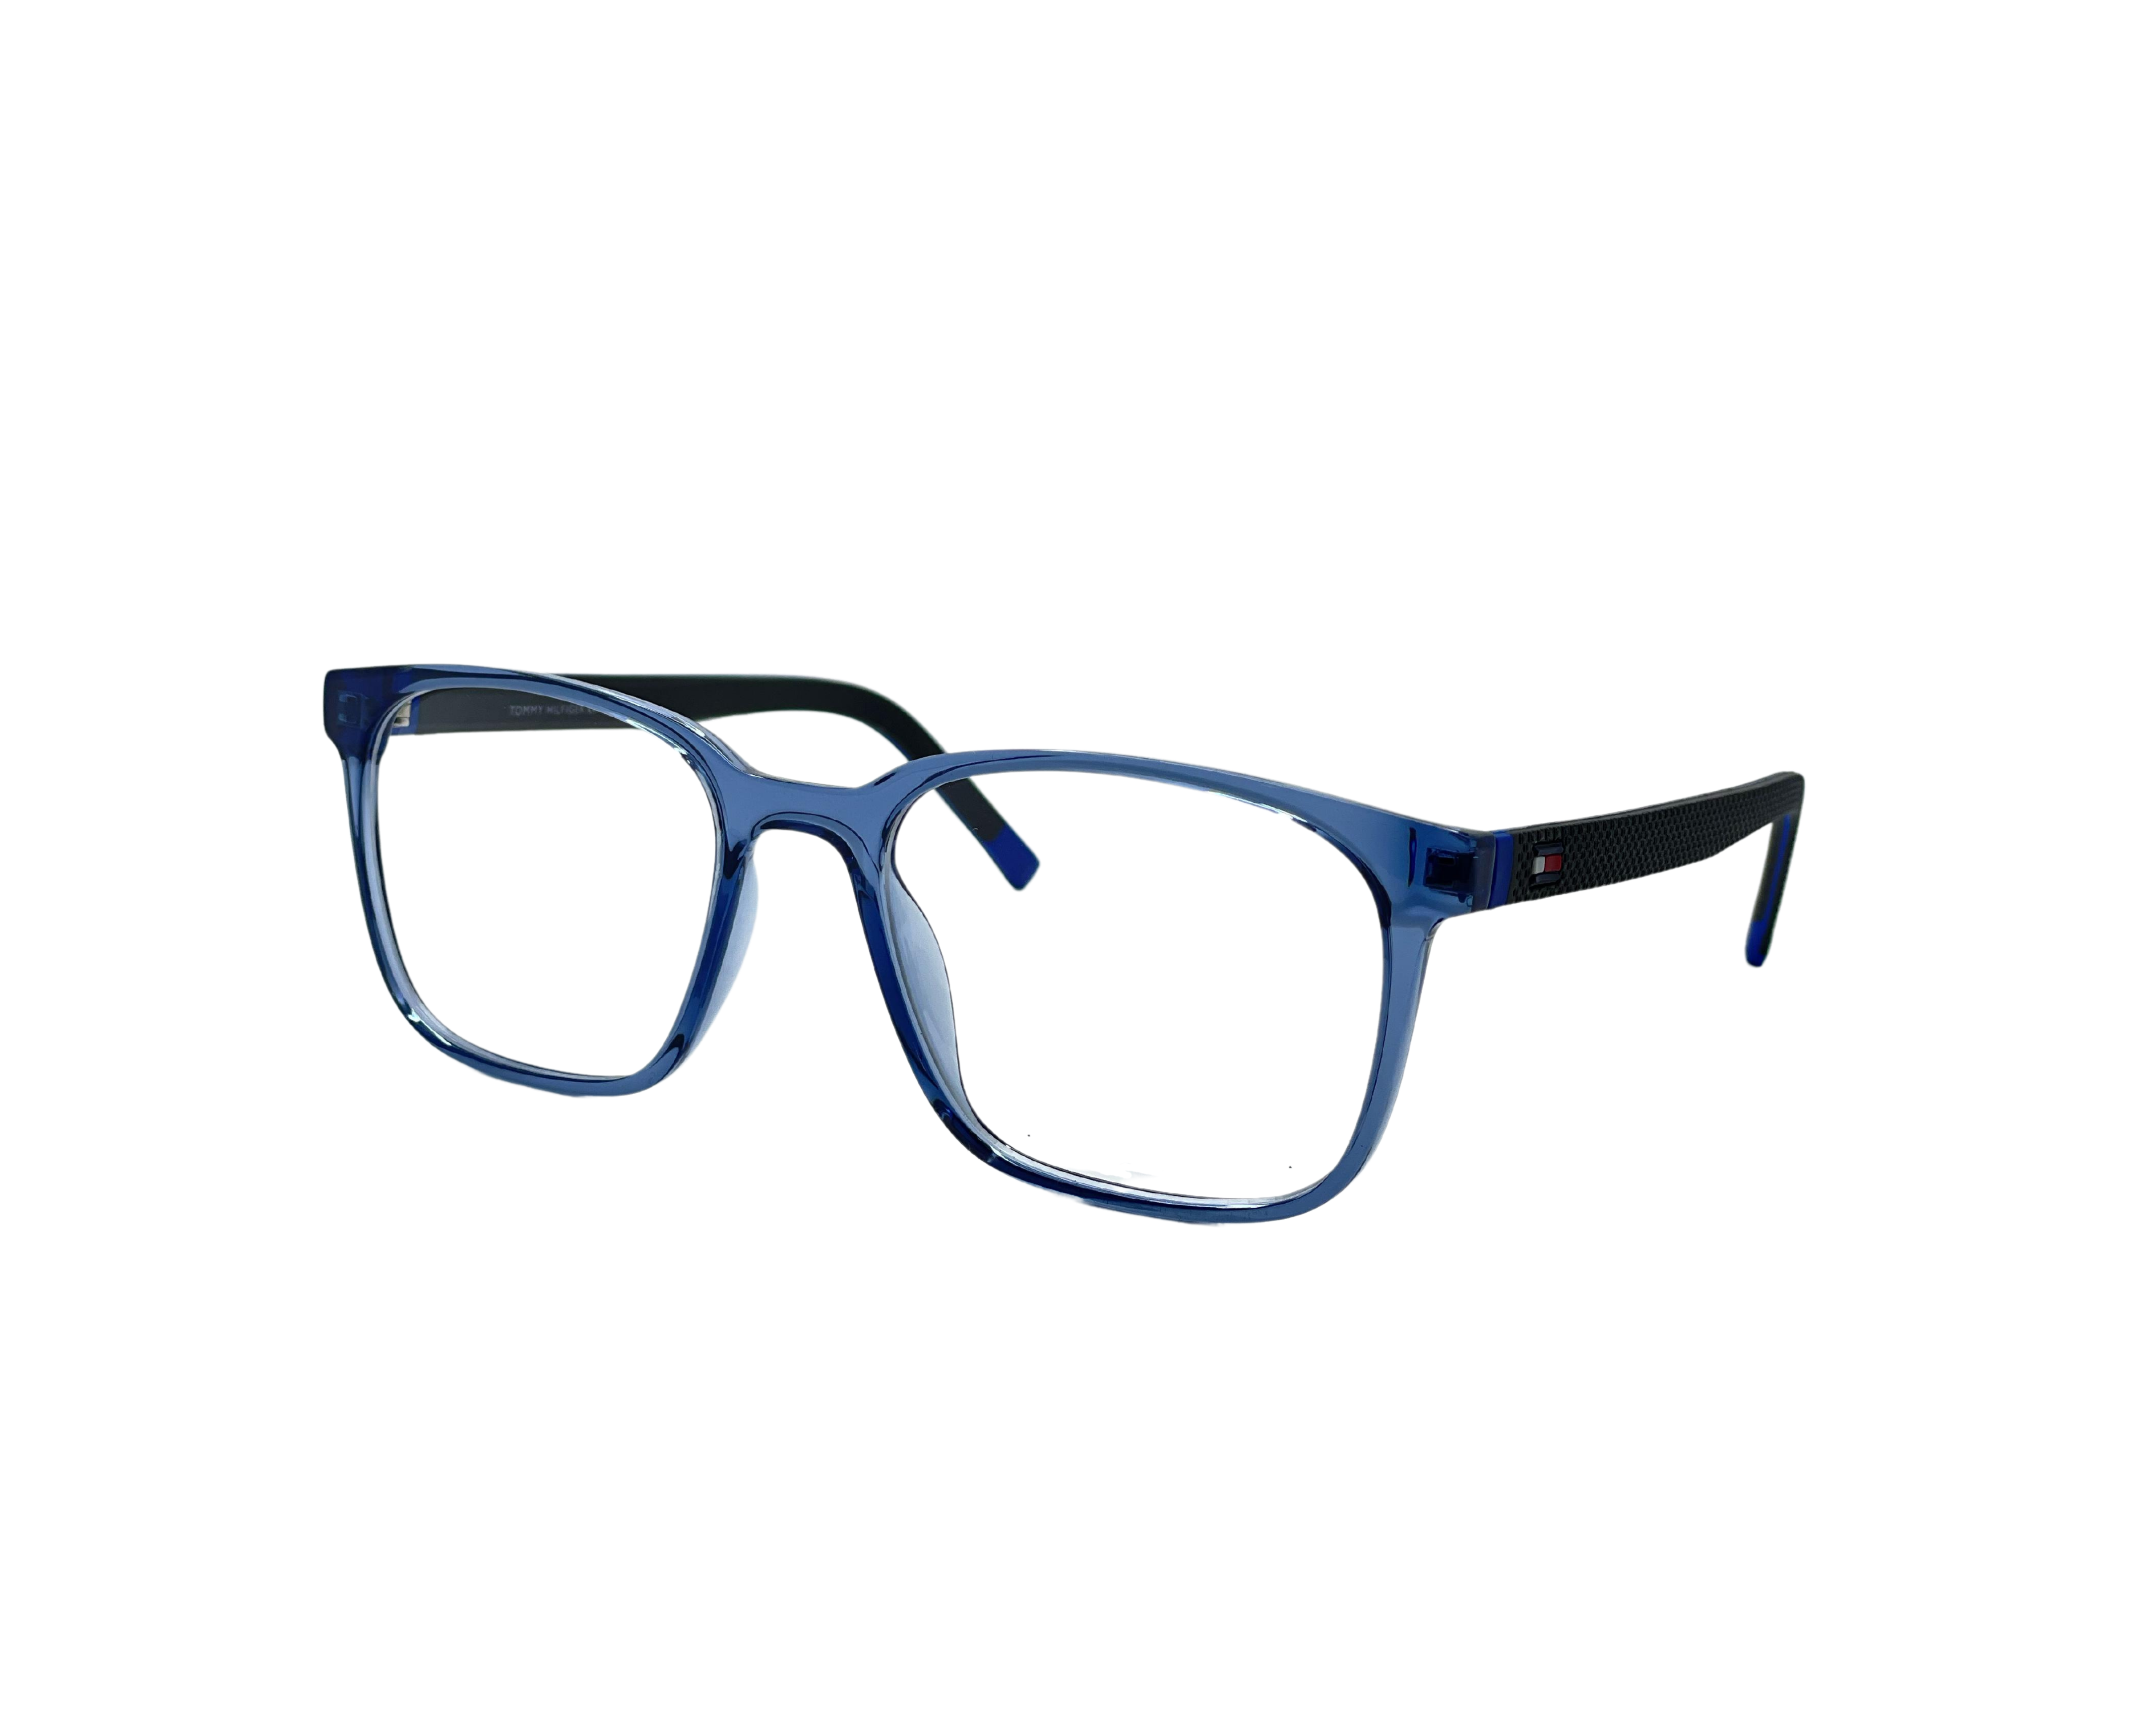 NS Luxury - 1786 - Blue - Eyeglasses